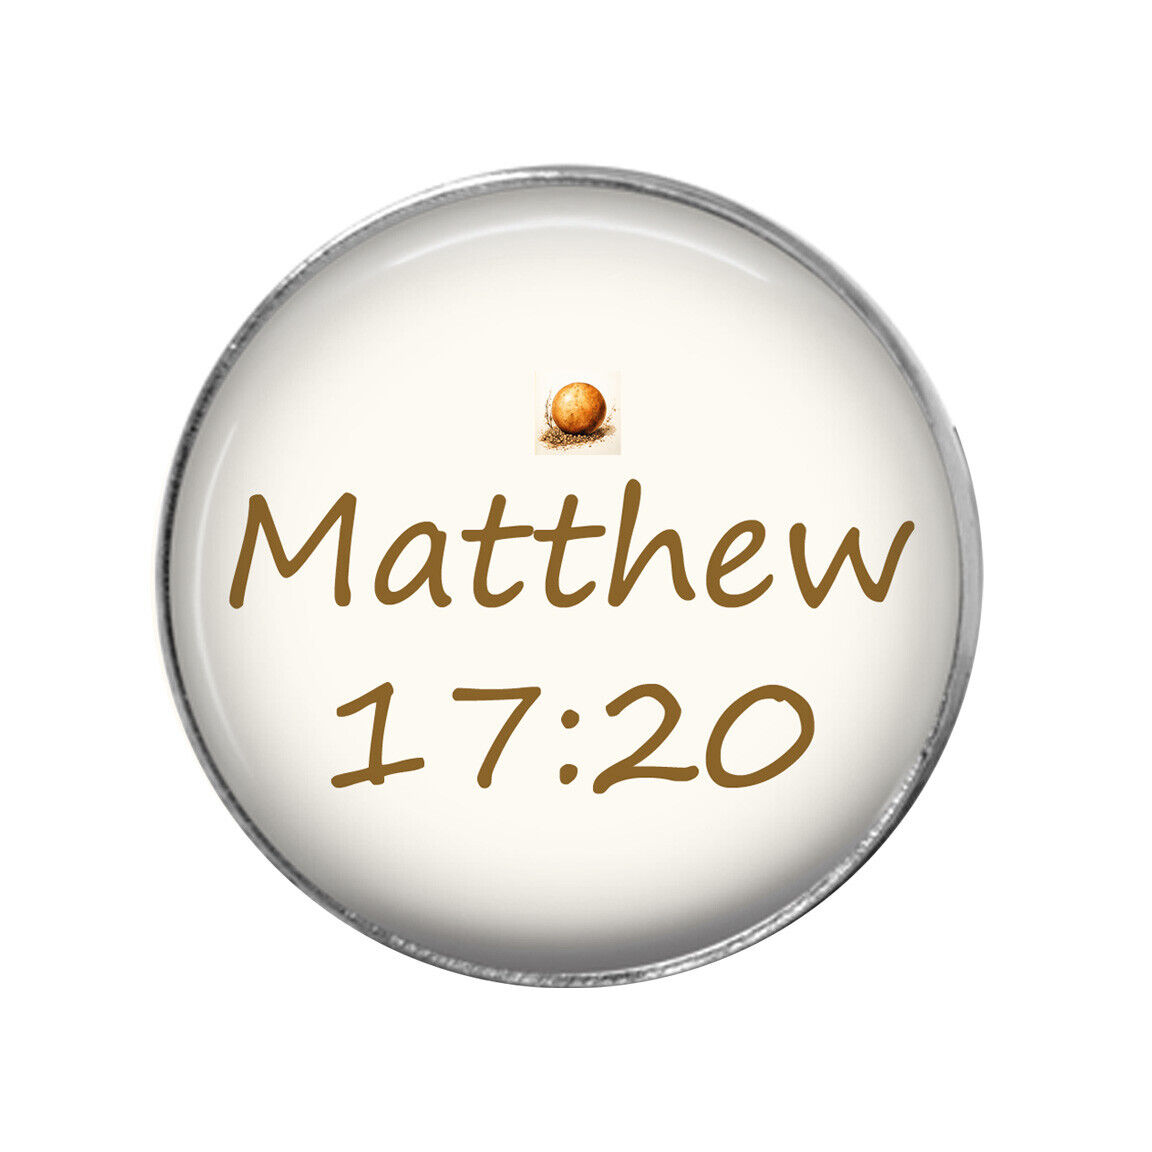 Matthew 17:20 Mustard Seed Bible Scripture Religious Lapel Pin Brooch Tie Tack